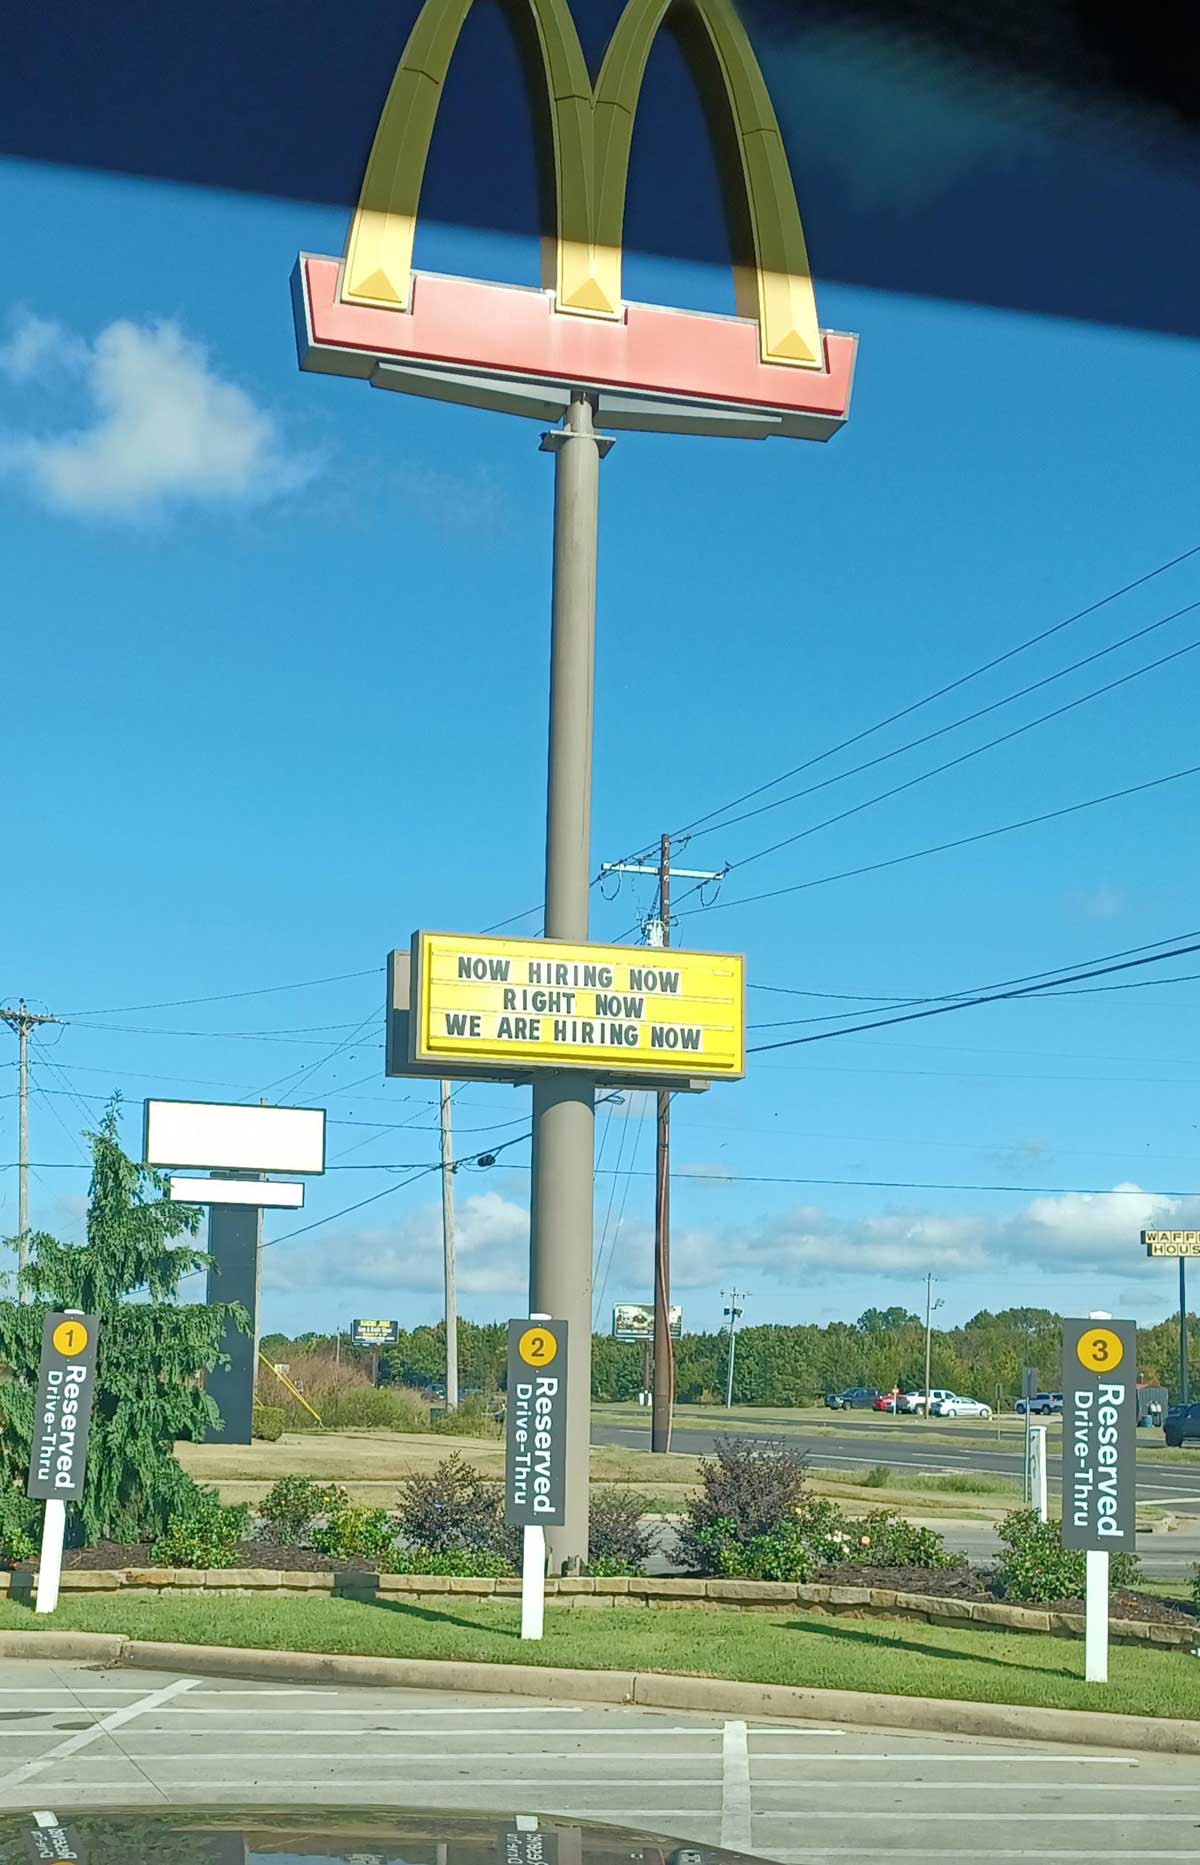 My local McDonald's is desperate